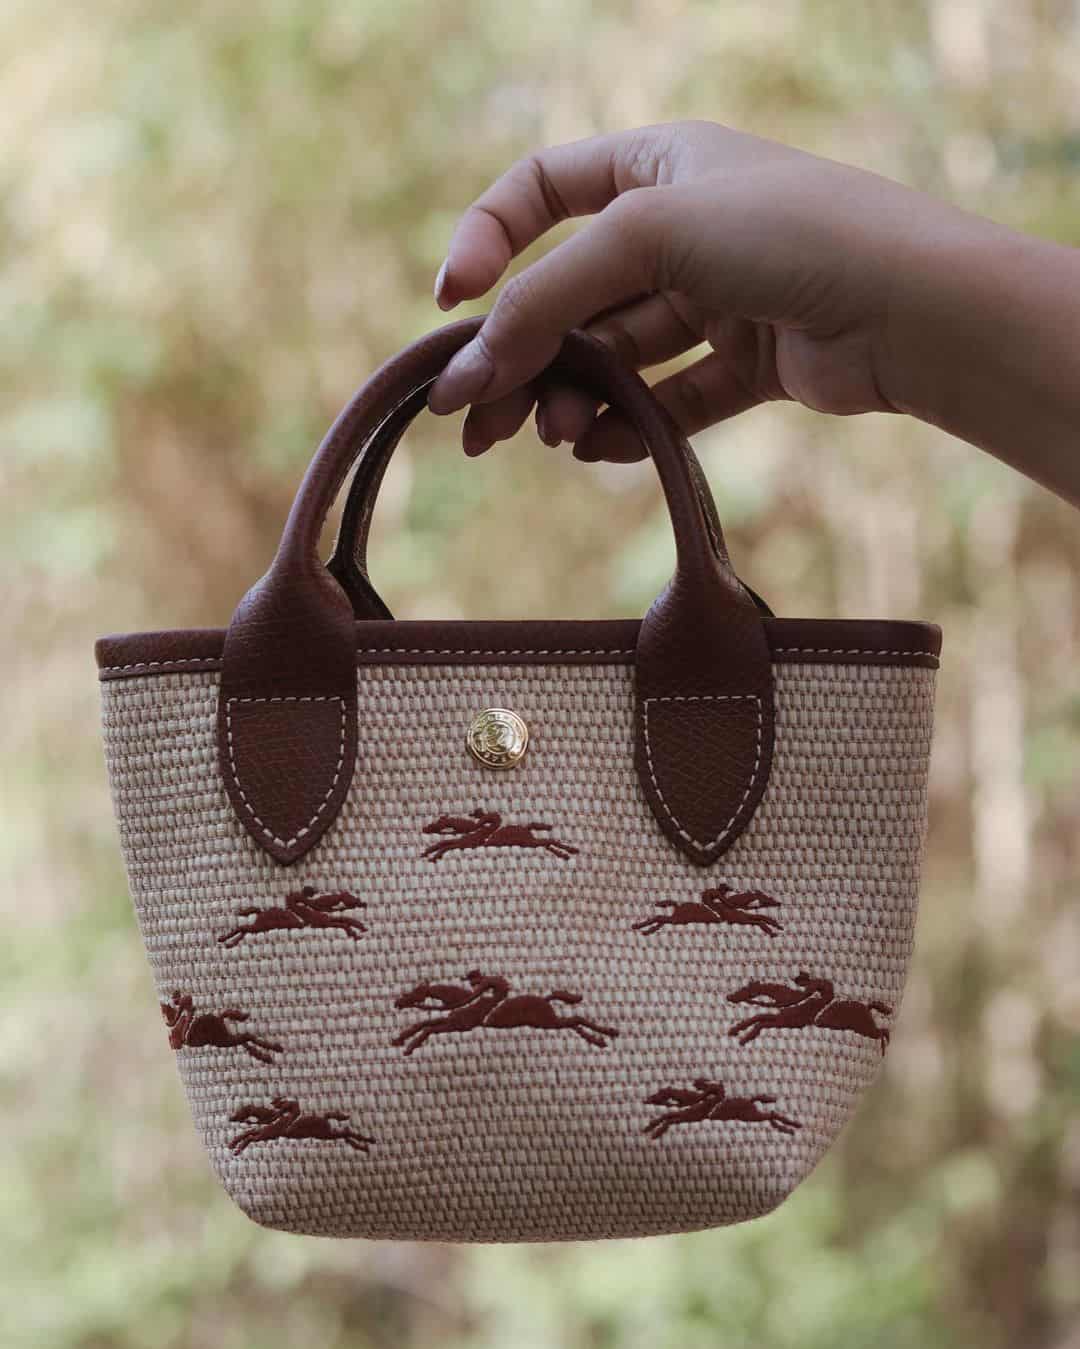 Le panier pliage xs basket bag in brown canvas small bag